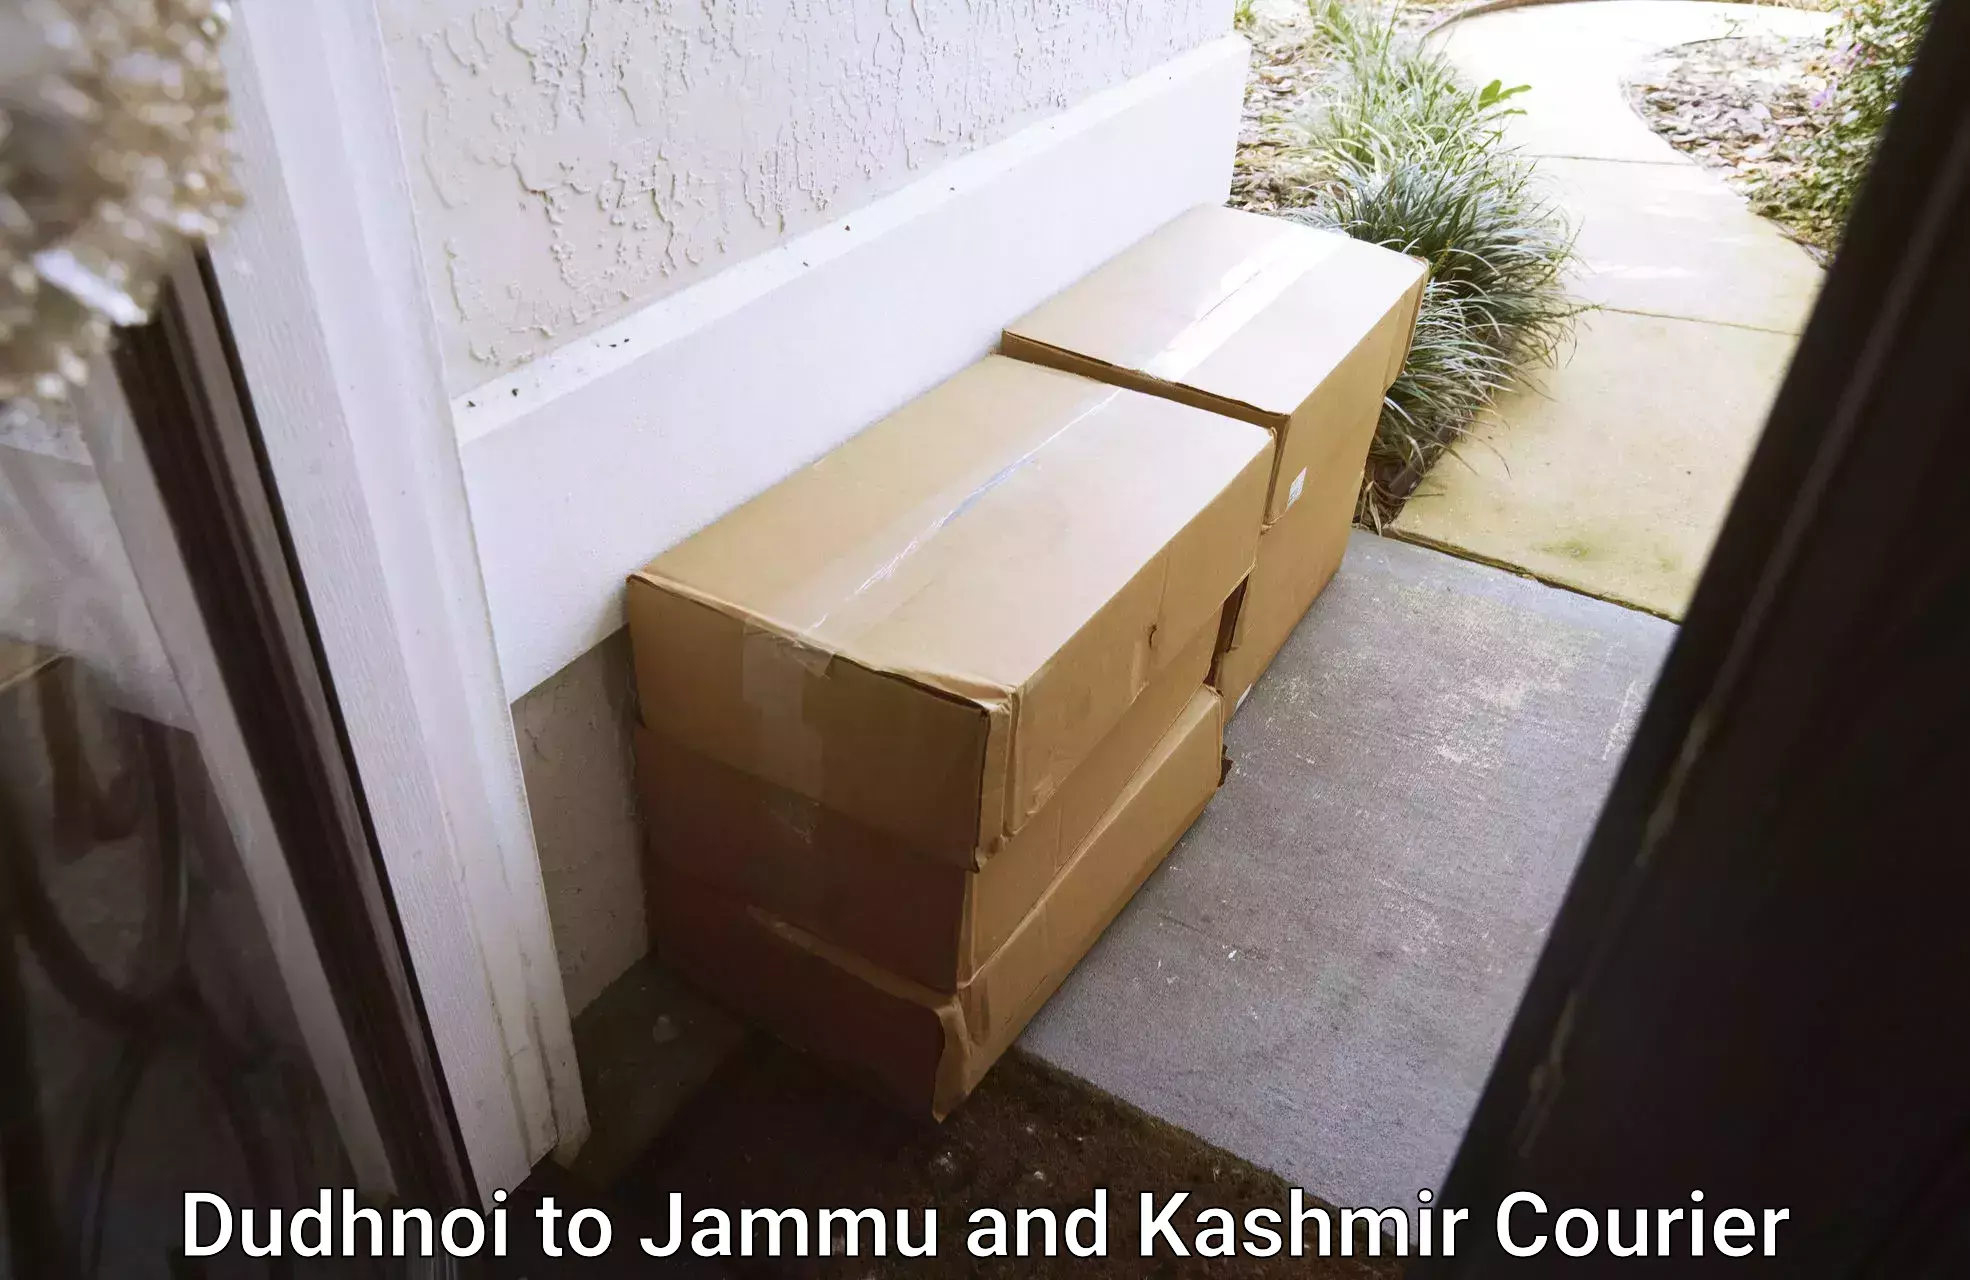 Efficient parcel service Dudhnoi to Jammu